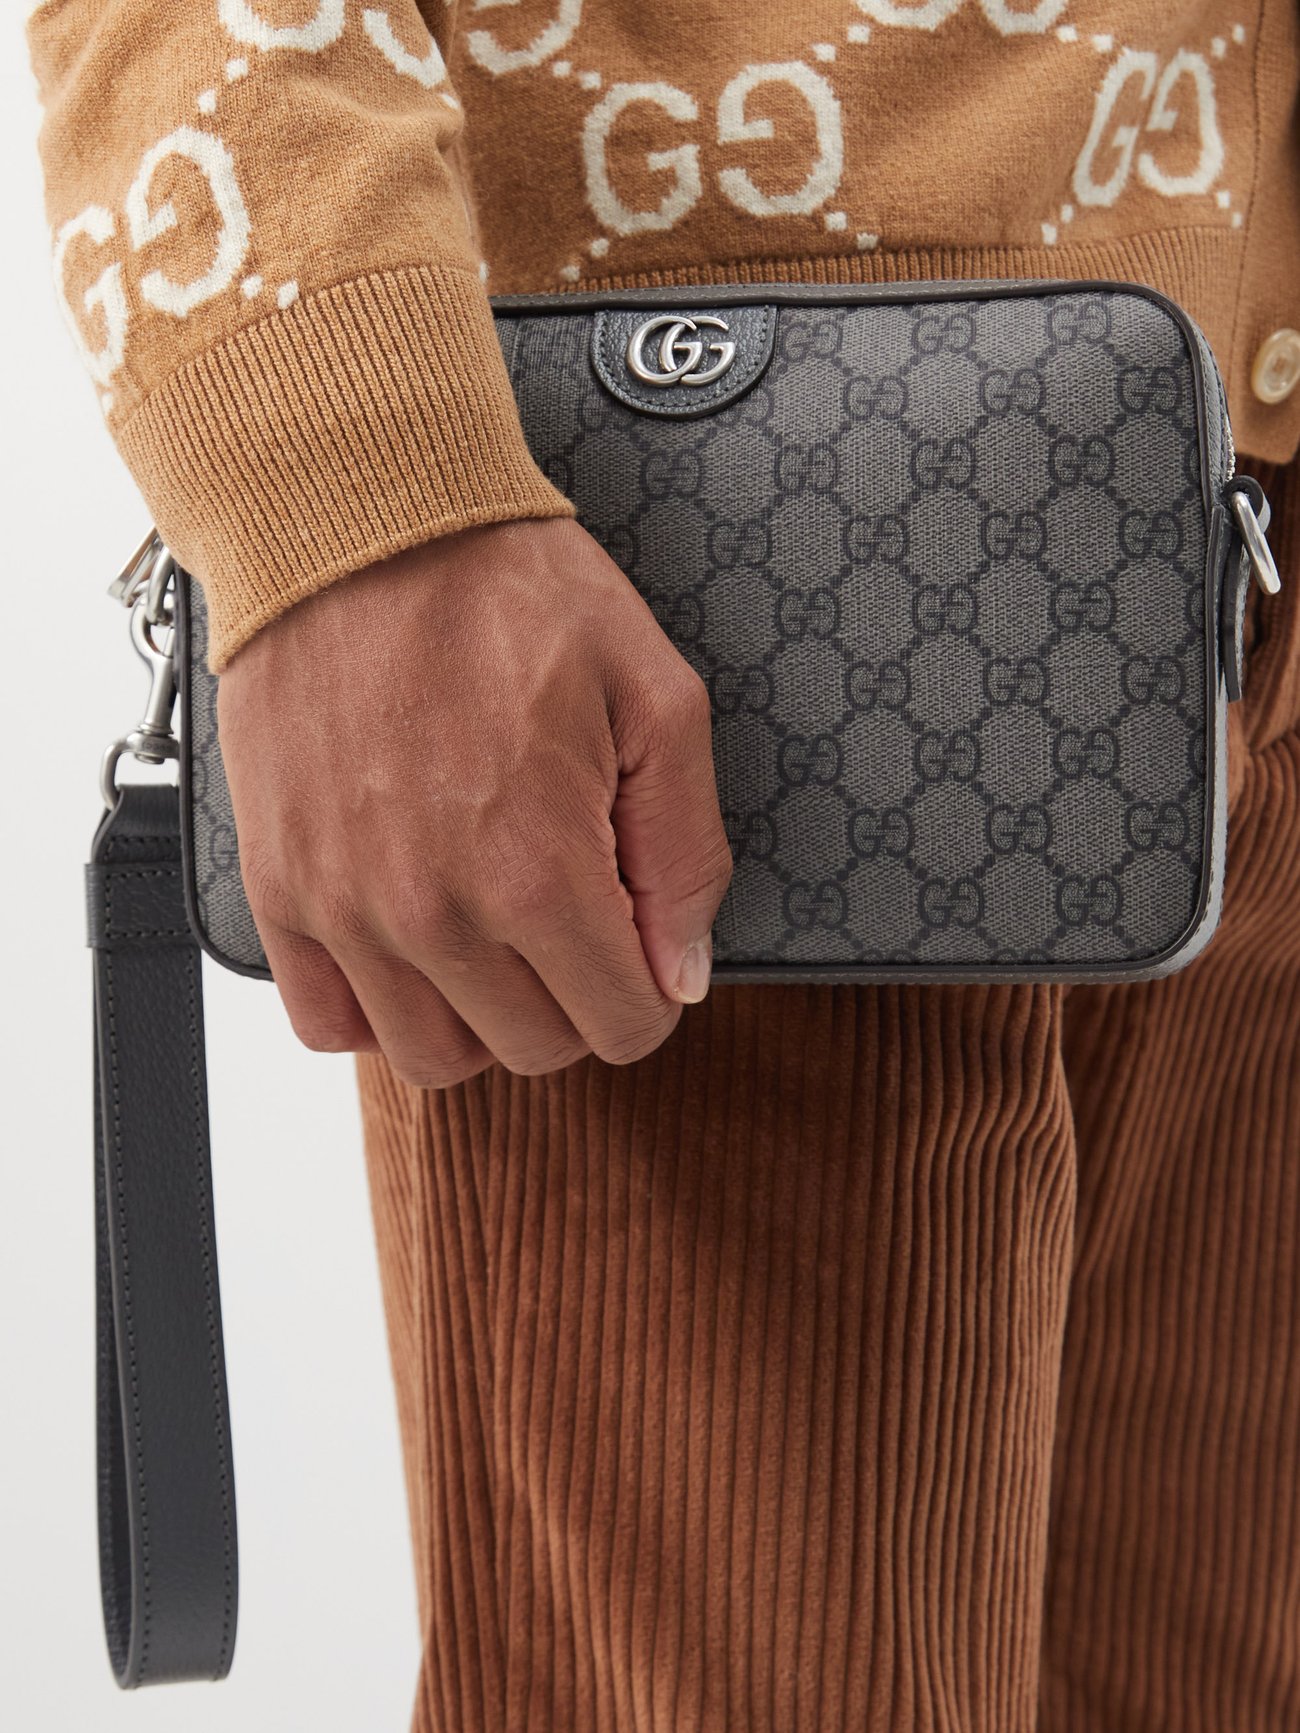 Black GG-jacquard coated-canvas cross-body bag, Gucci